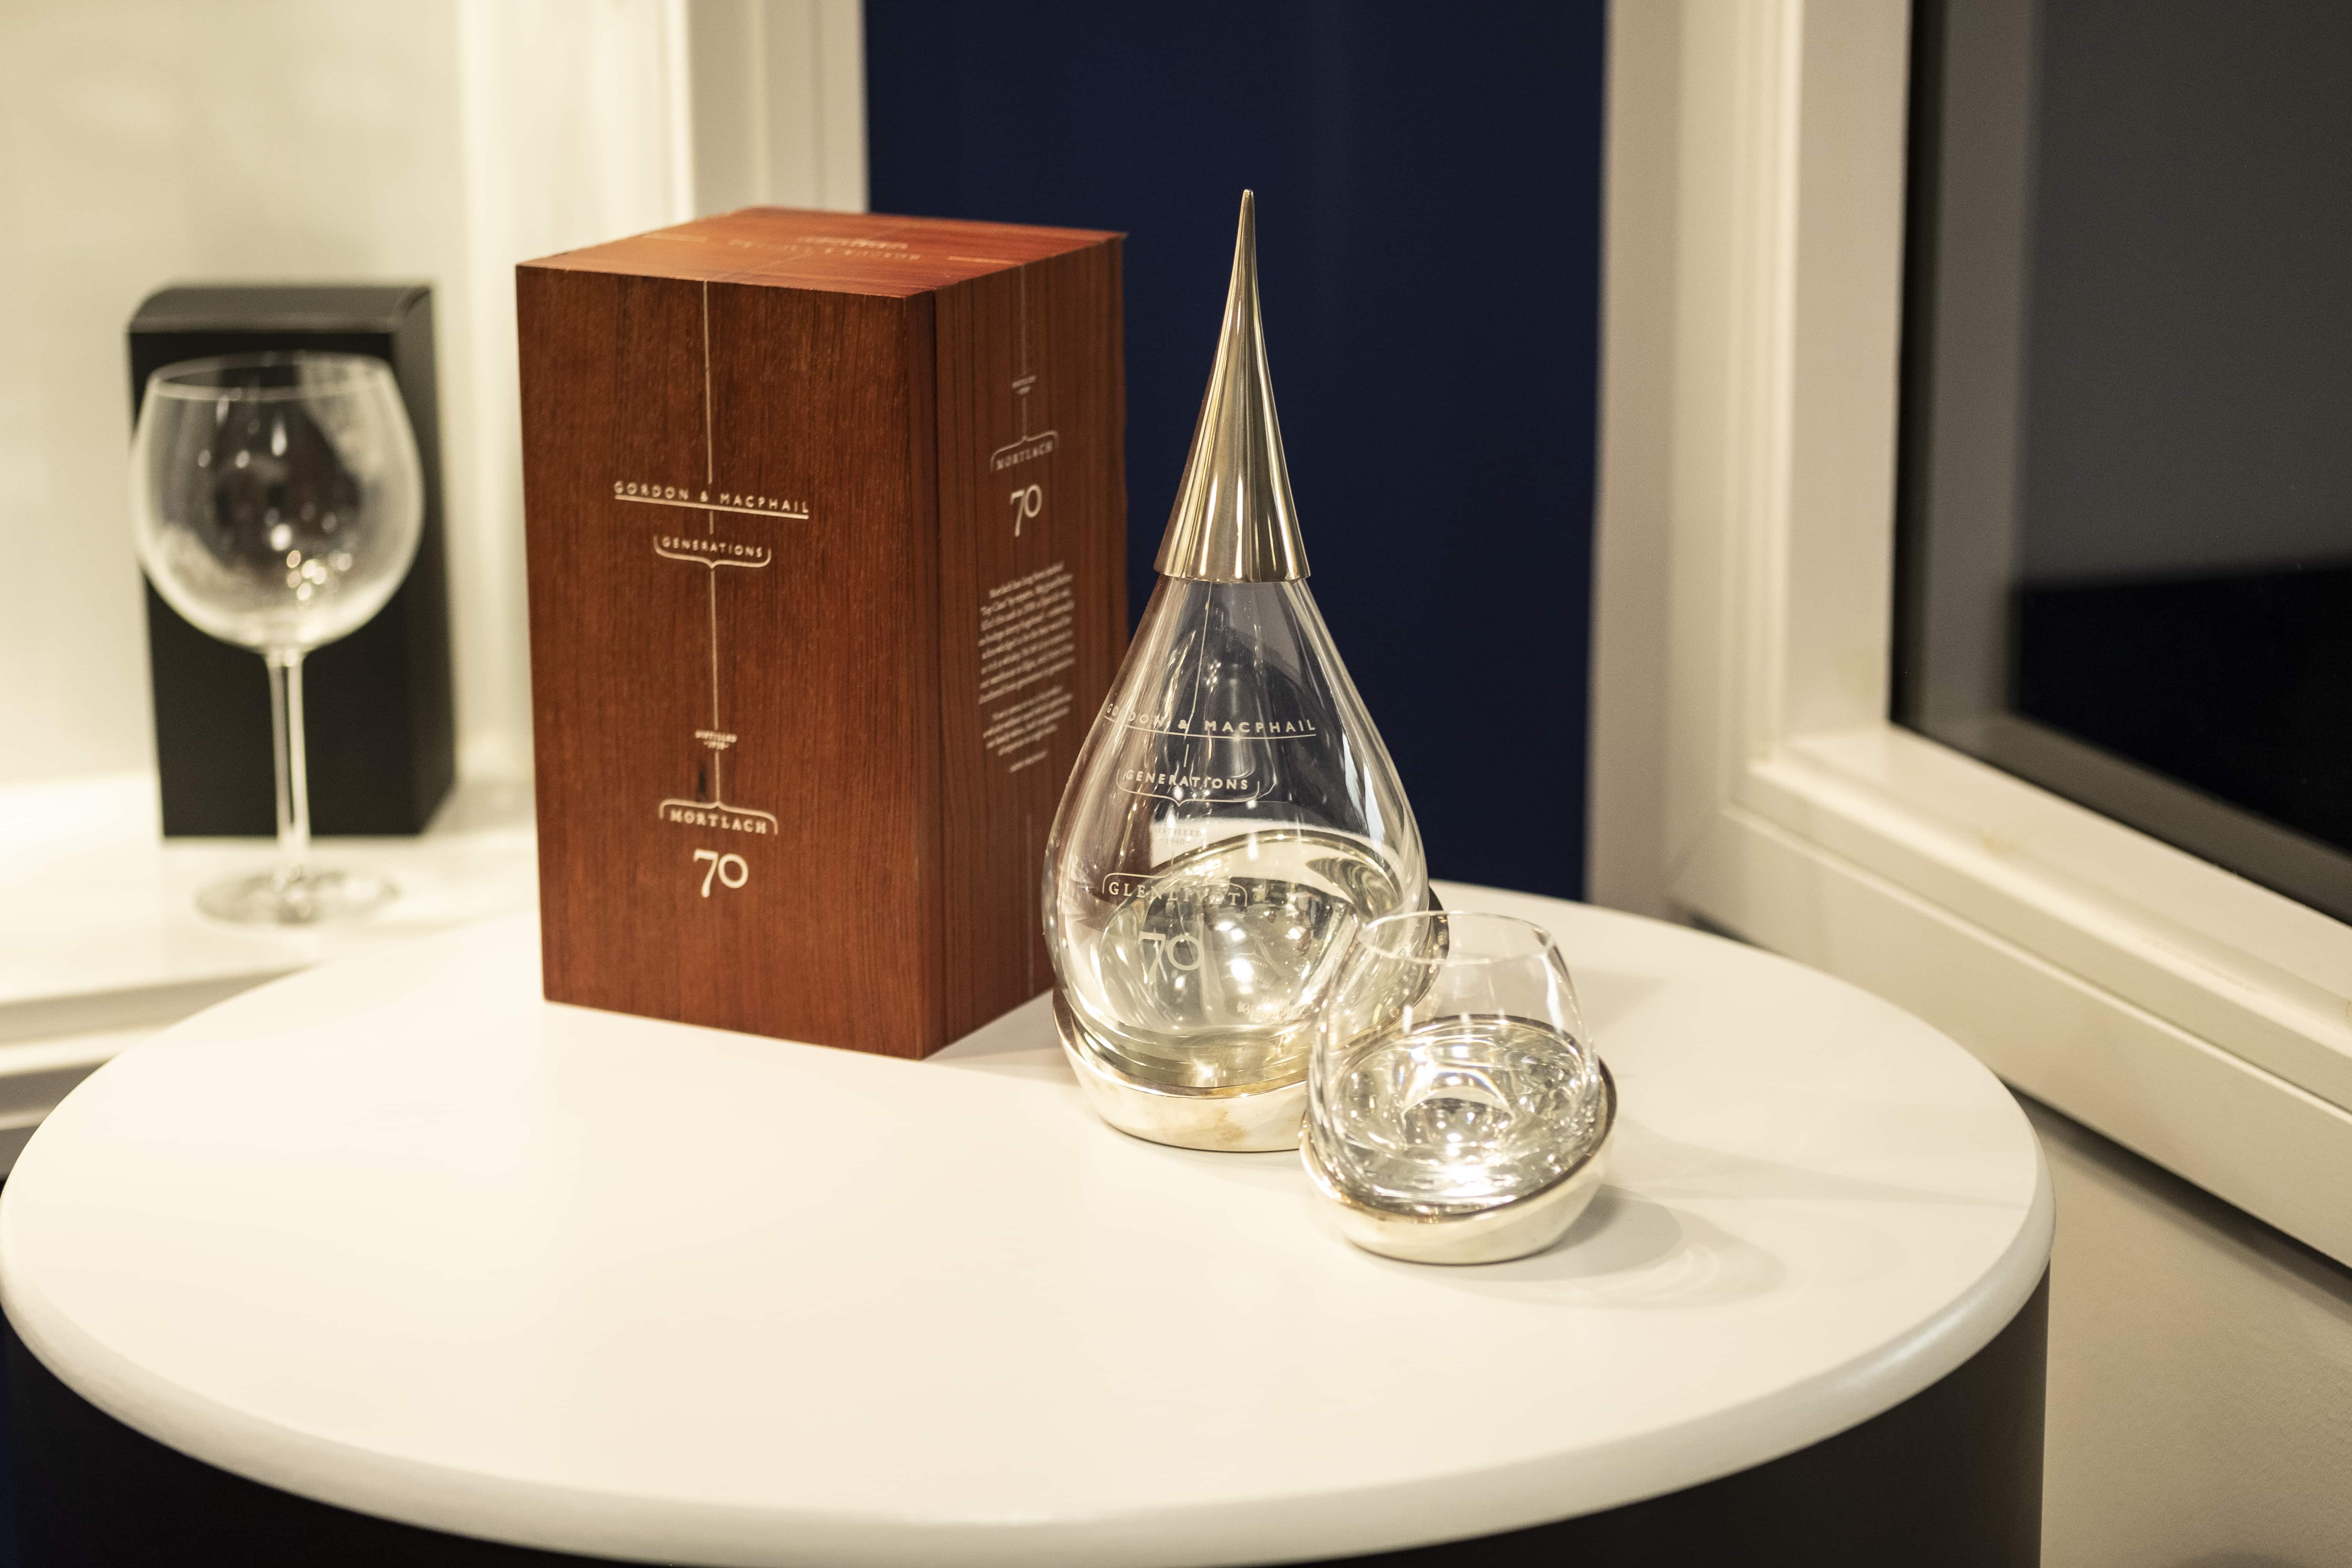 Glencairn Crystal decanter and glass set